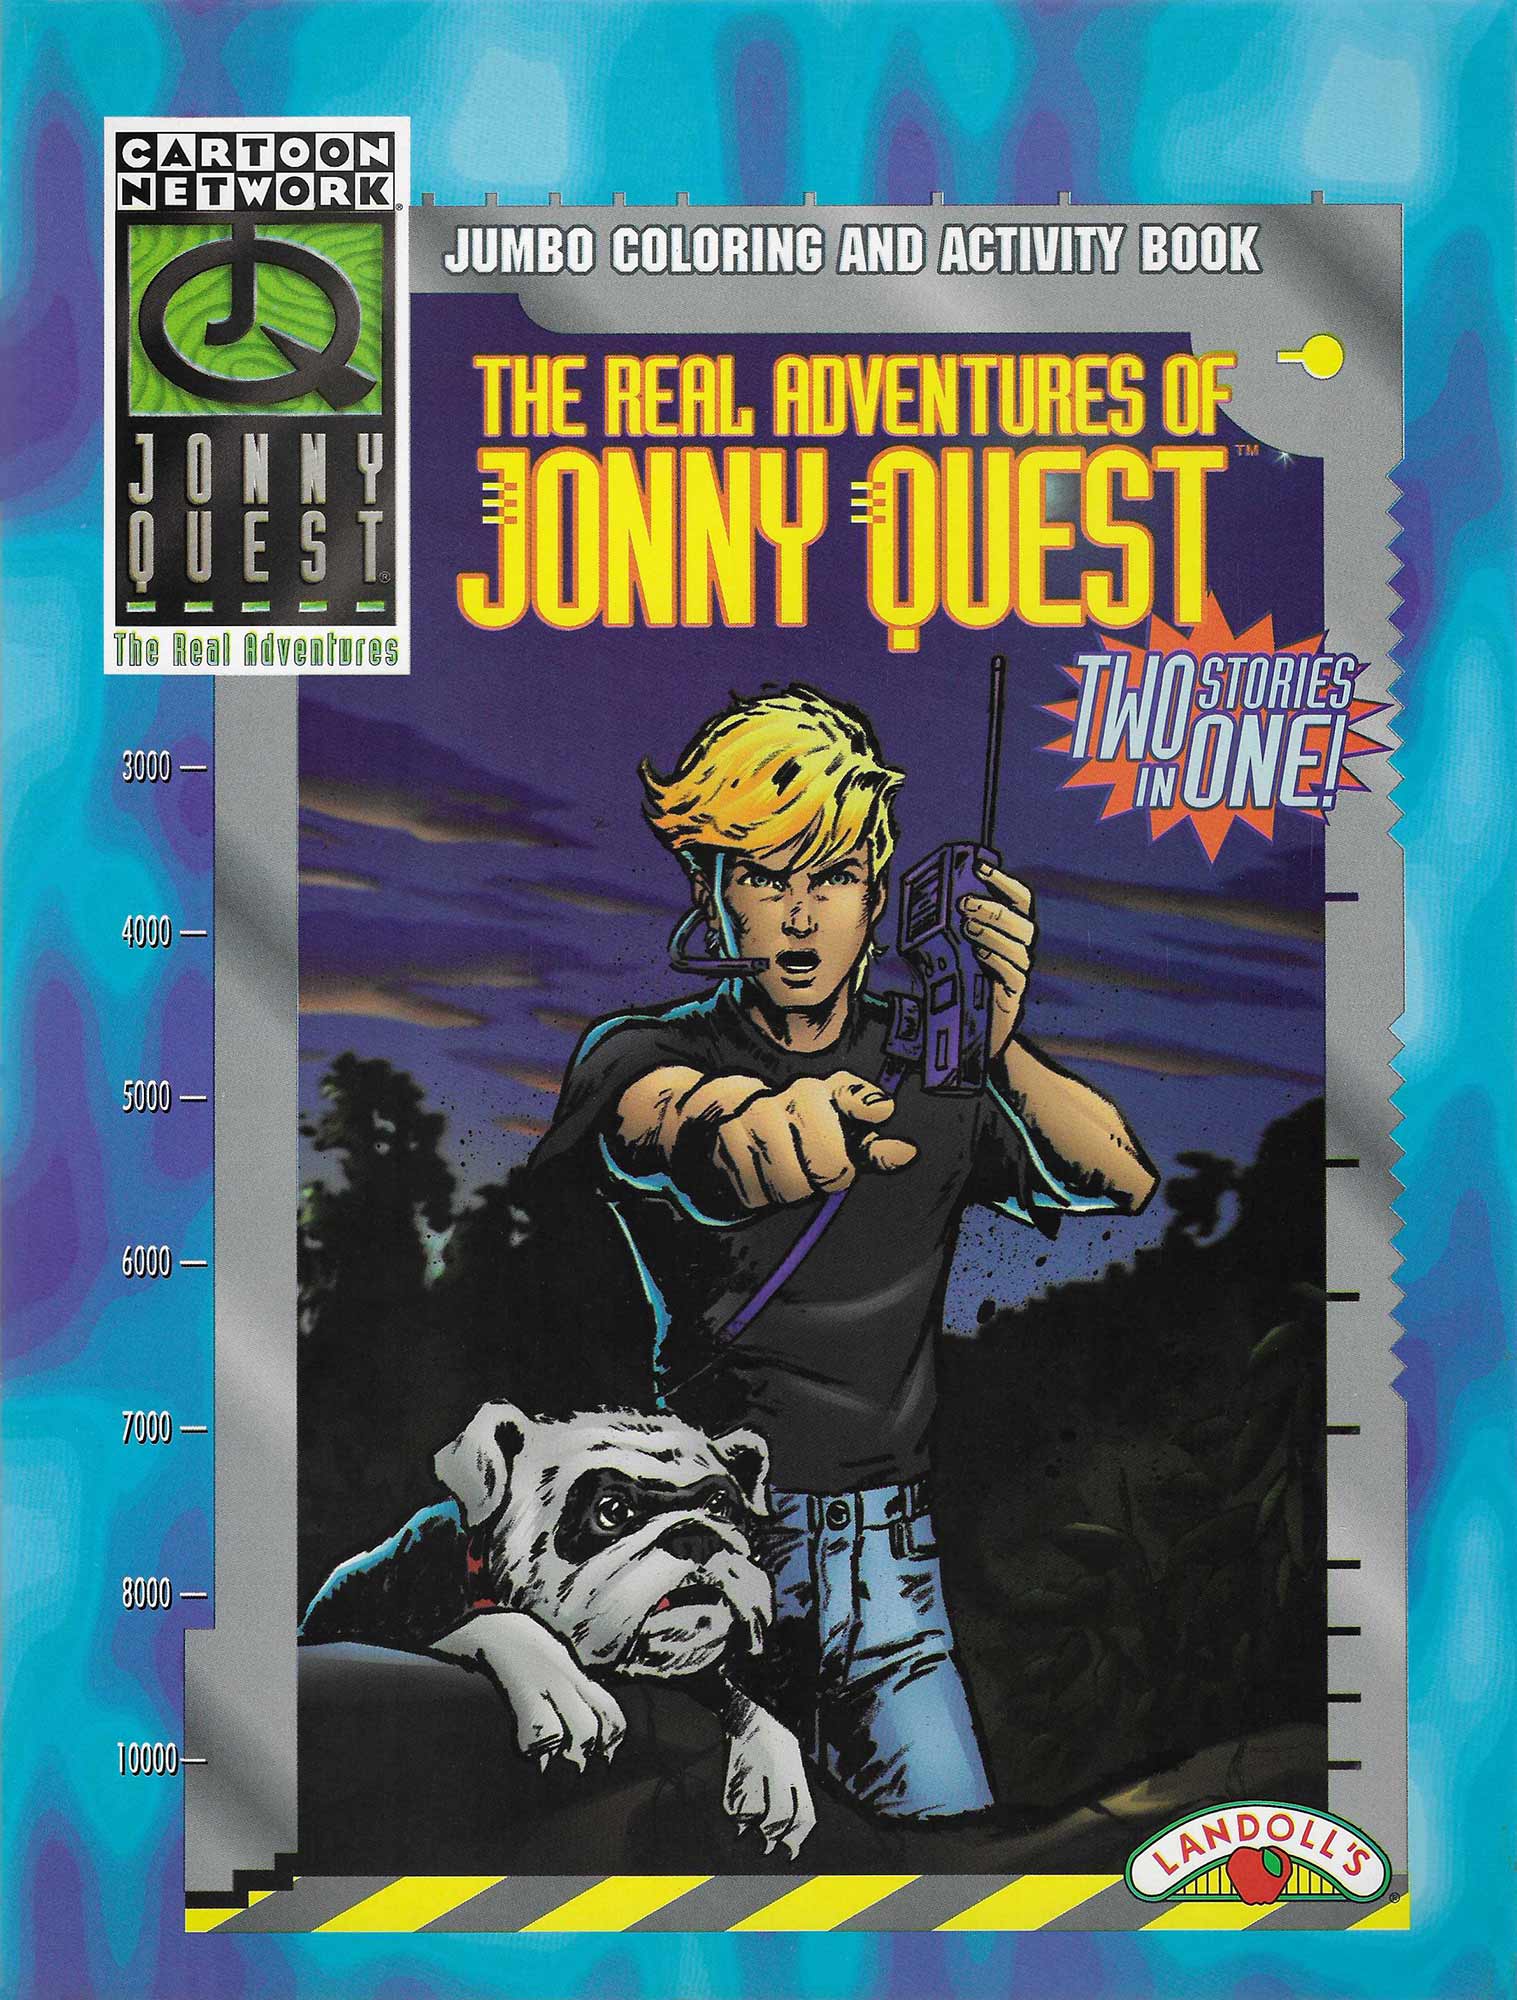 The Real Adventures of Jonny Quest The Real Adventures of Jonny